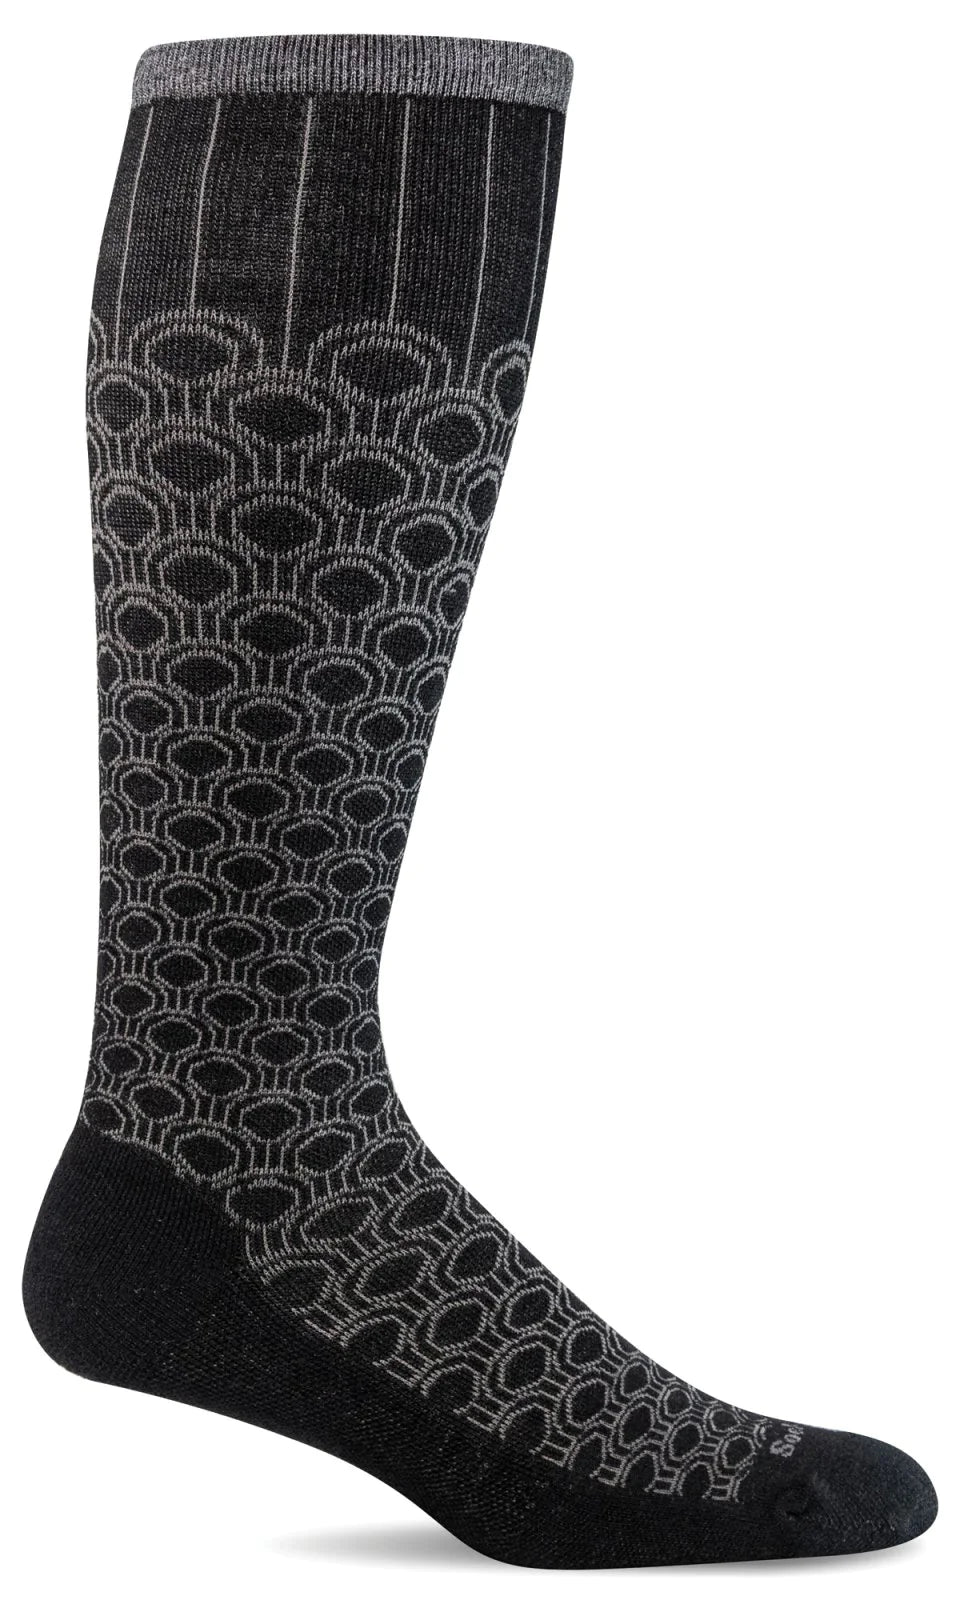 Sockwell - Women's Deco Dot Moderate Graduated Compression Socks - Black